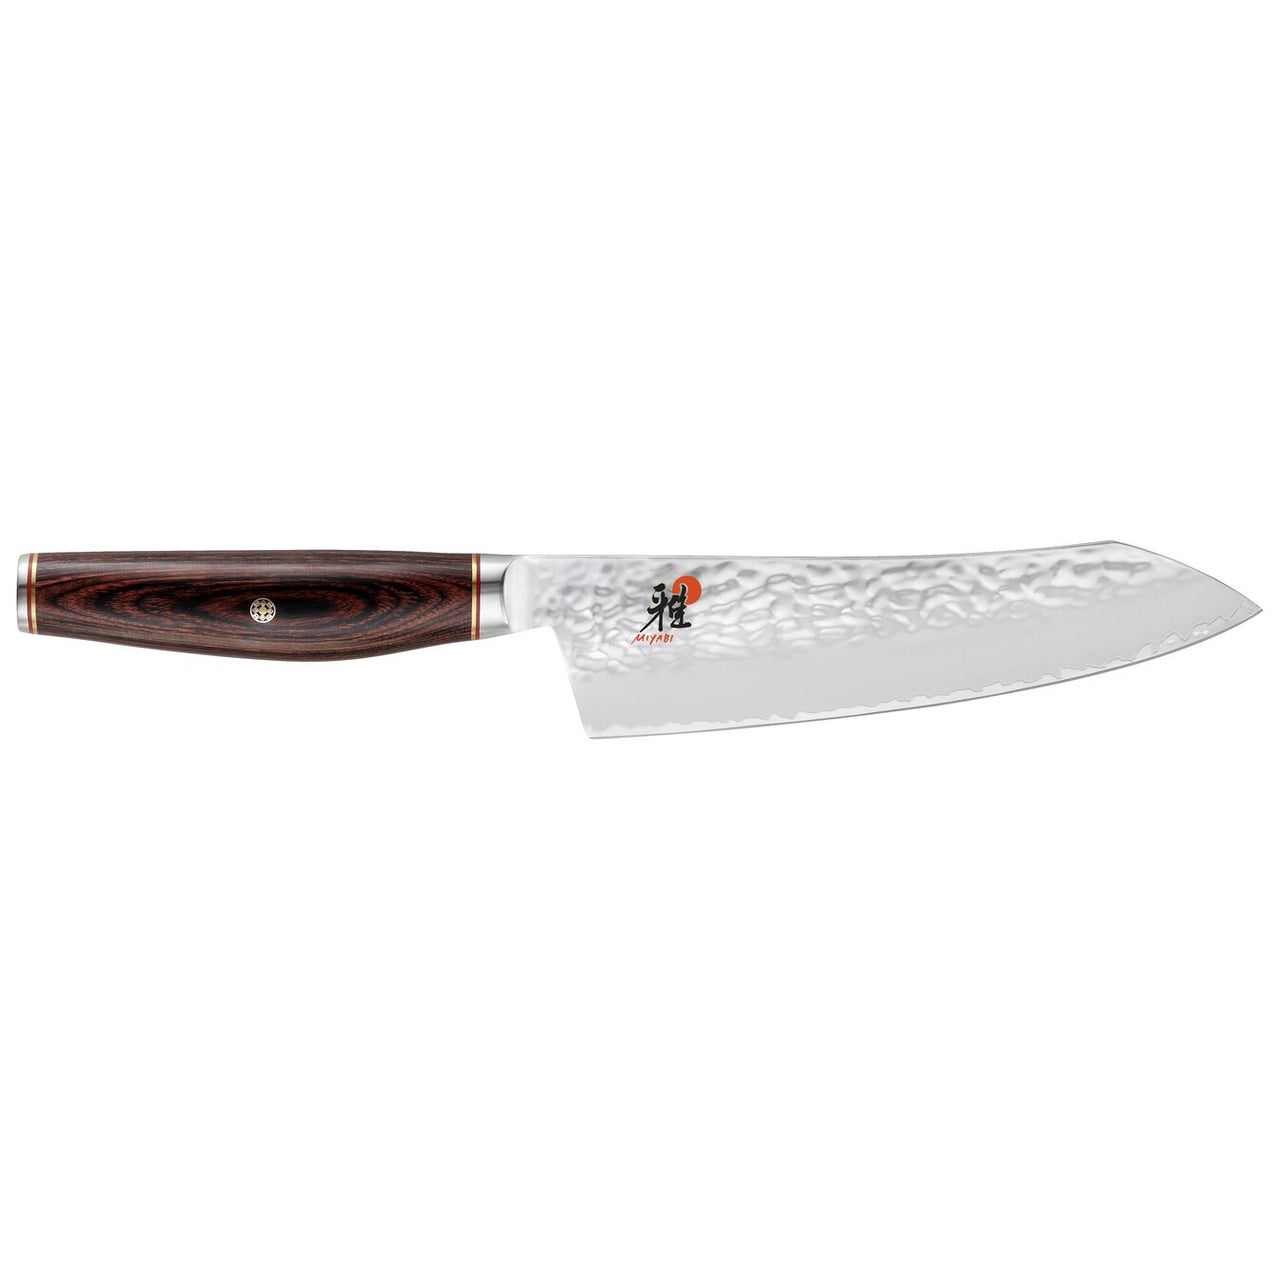 KITCHEN KNIFE (KIWI #840) MADE IN THAILAND 泰國刀